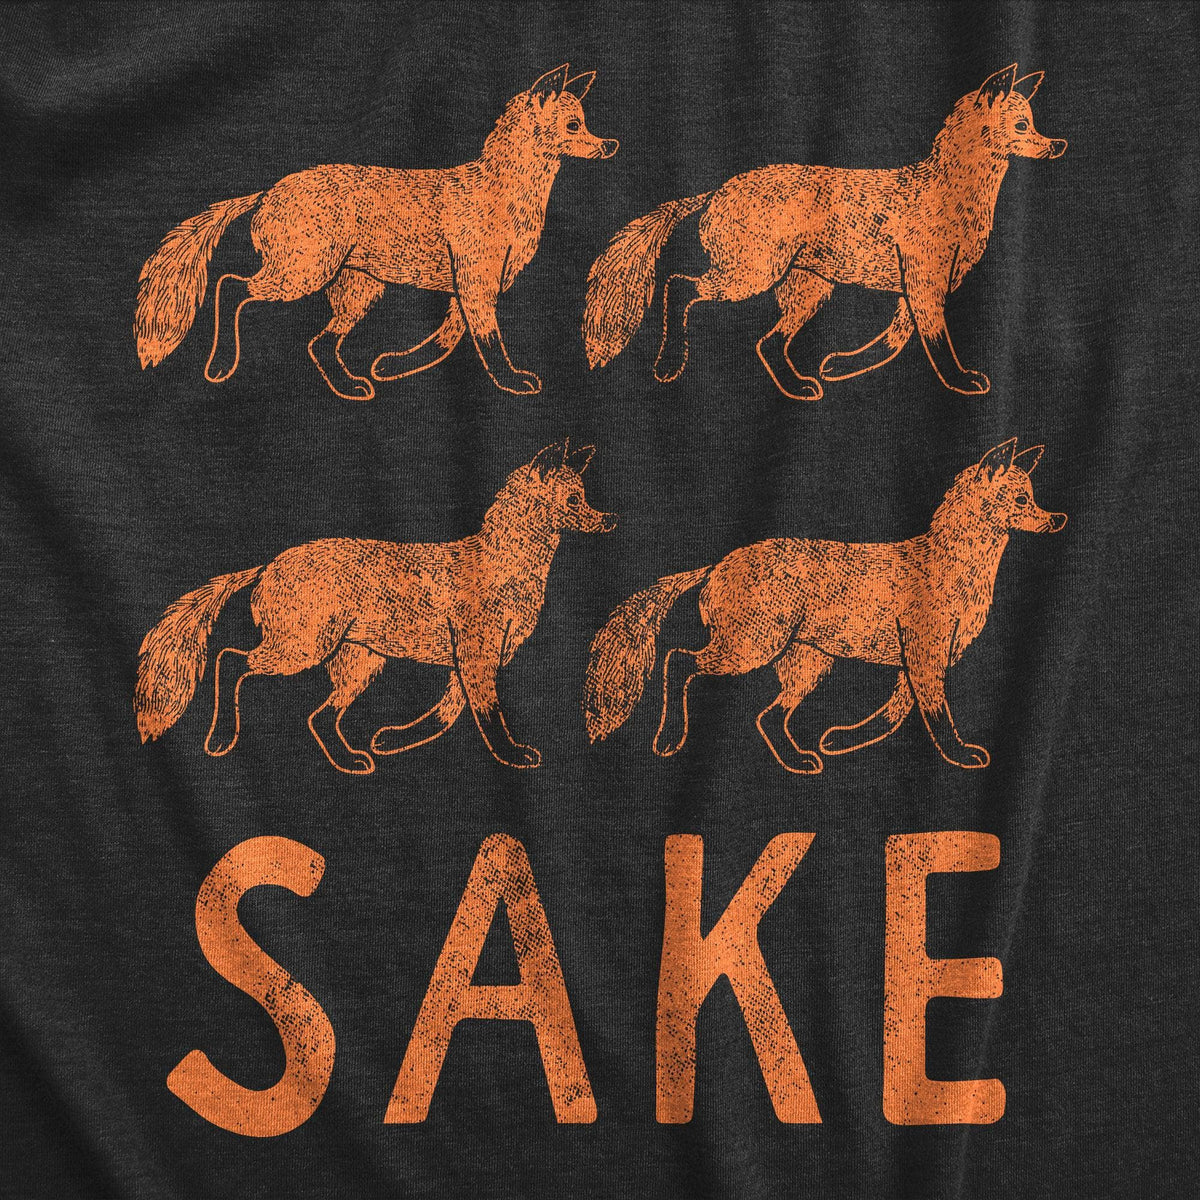 Four Fox Sake Women&#39;s Tshirt  -  Crazy Dog T-Shirts